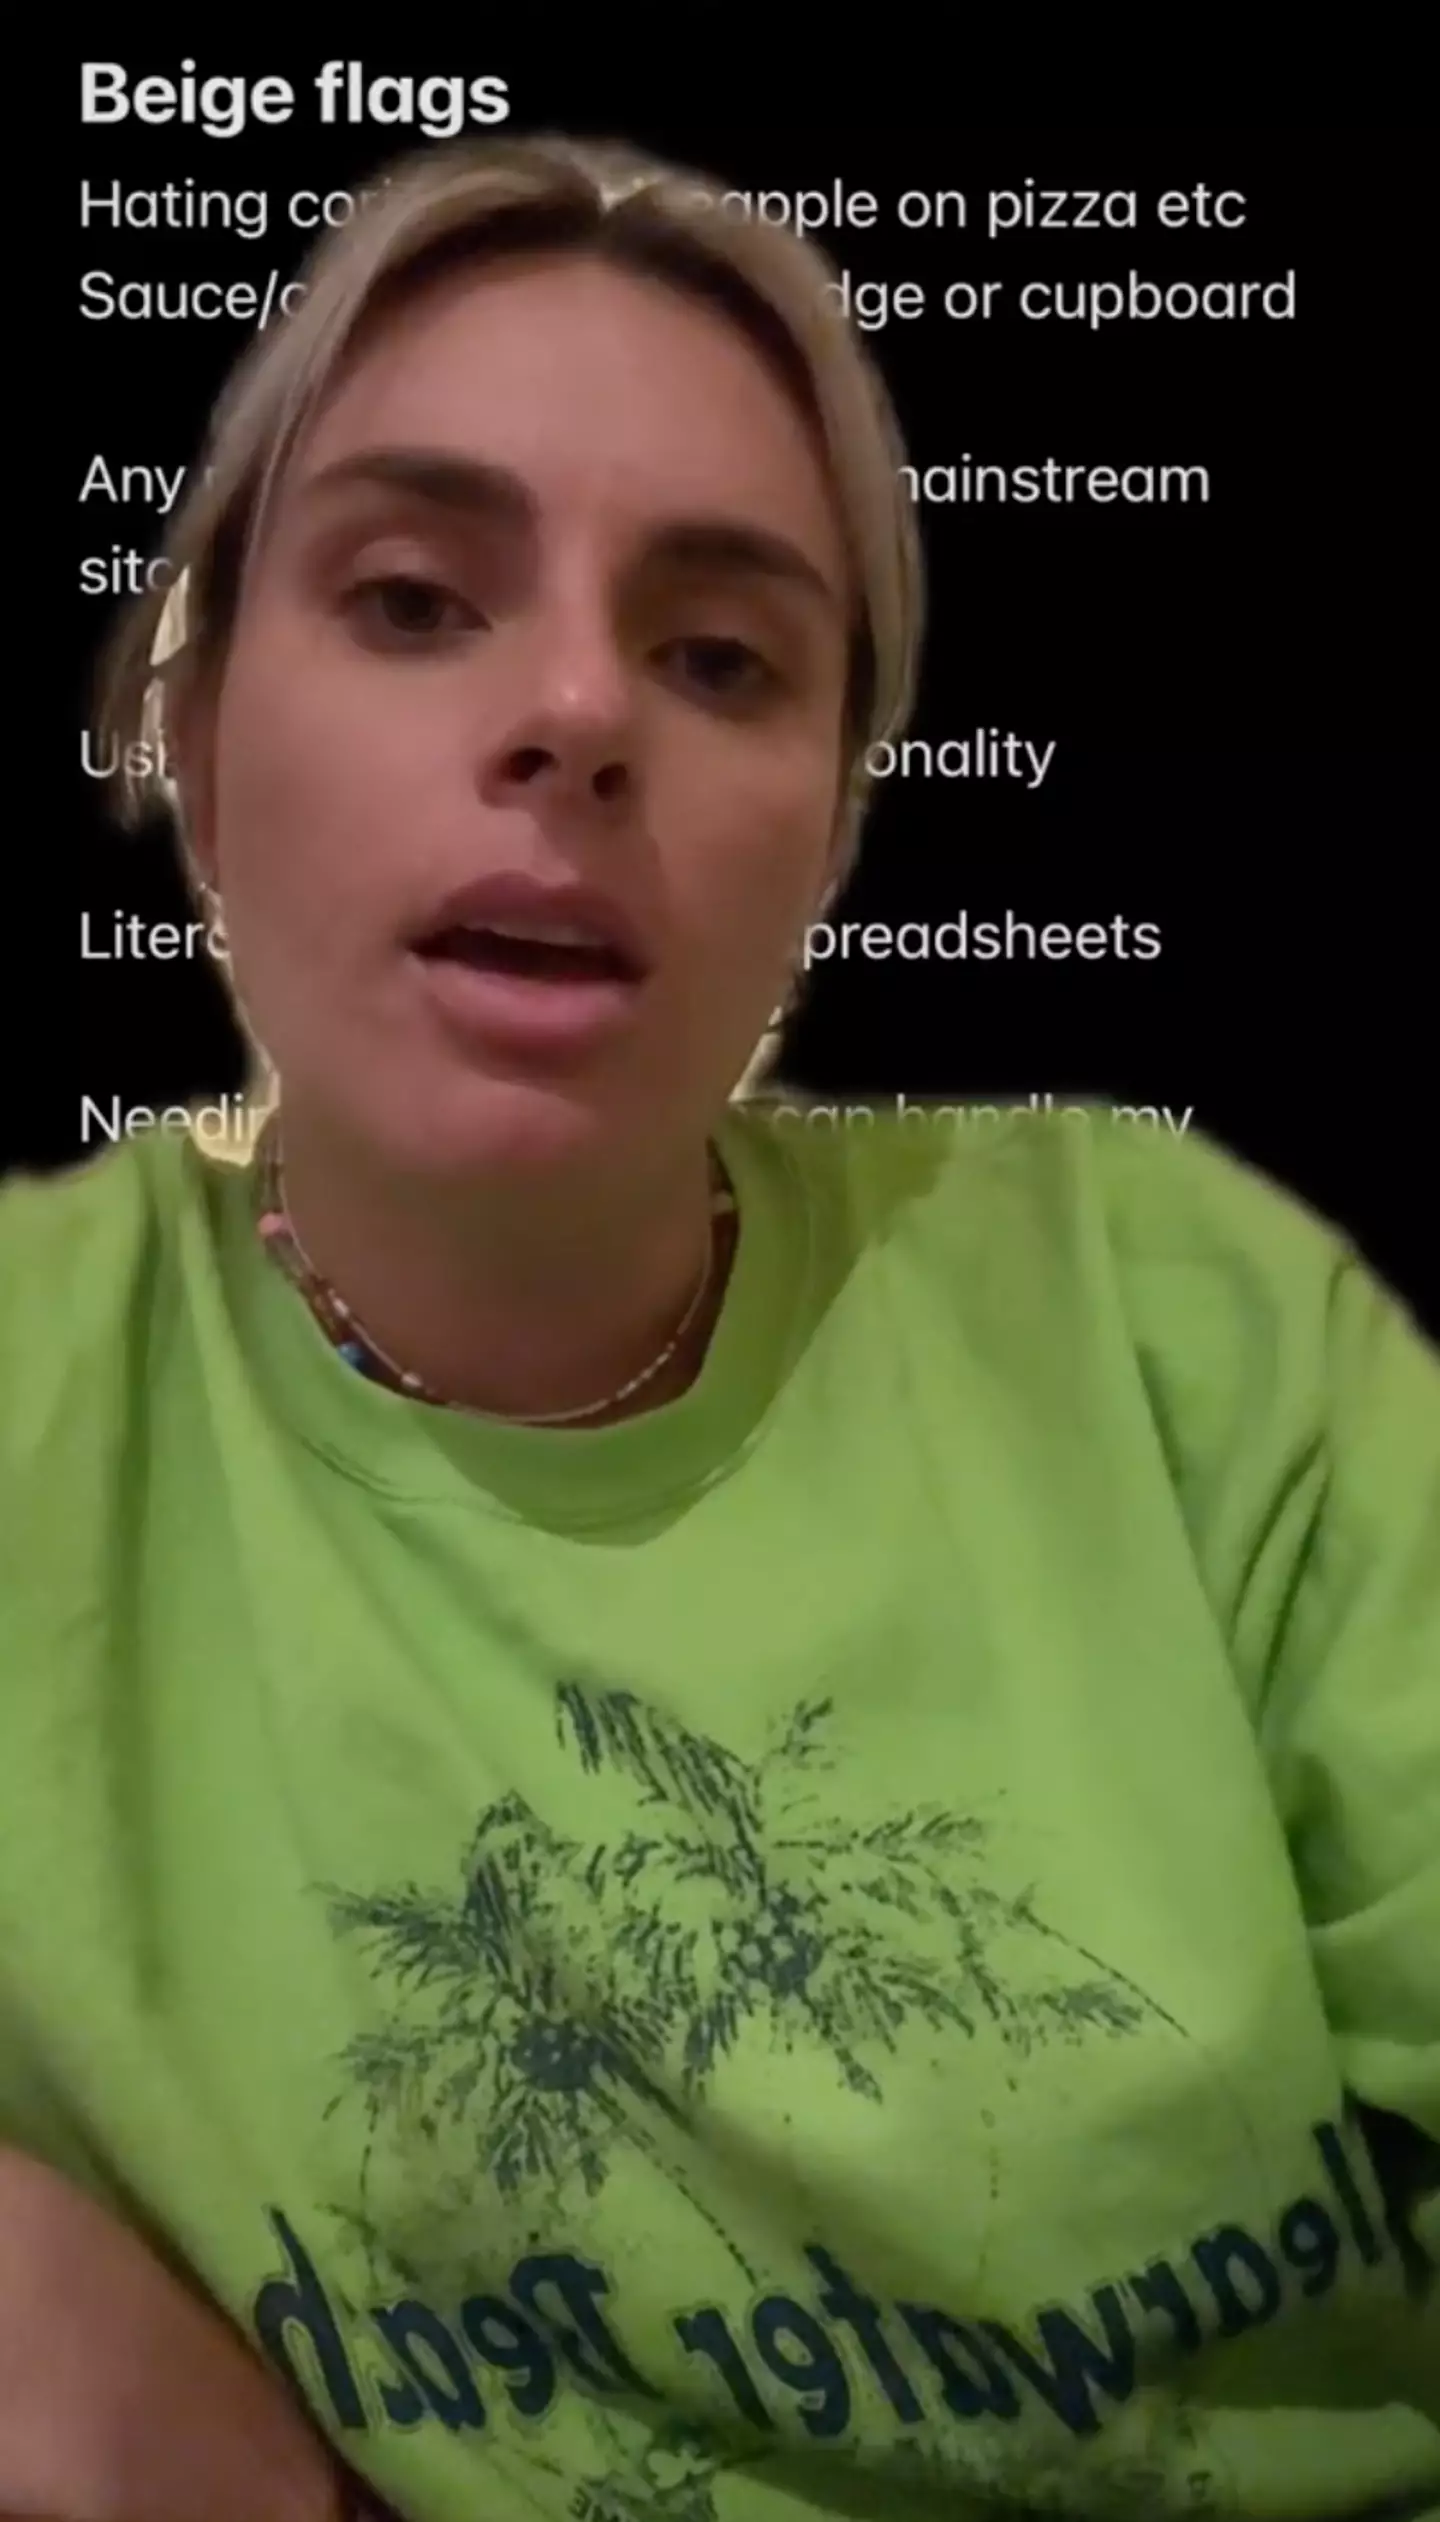 Caitlin coins the term 'beige flags' in a viral TikTok video.